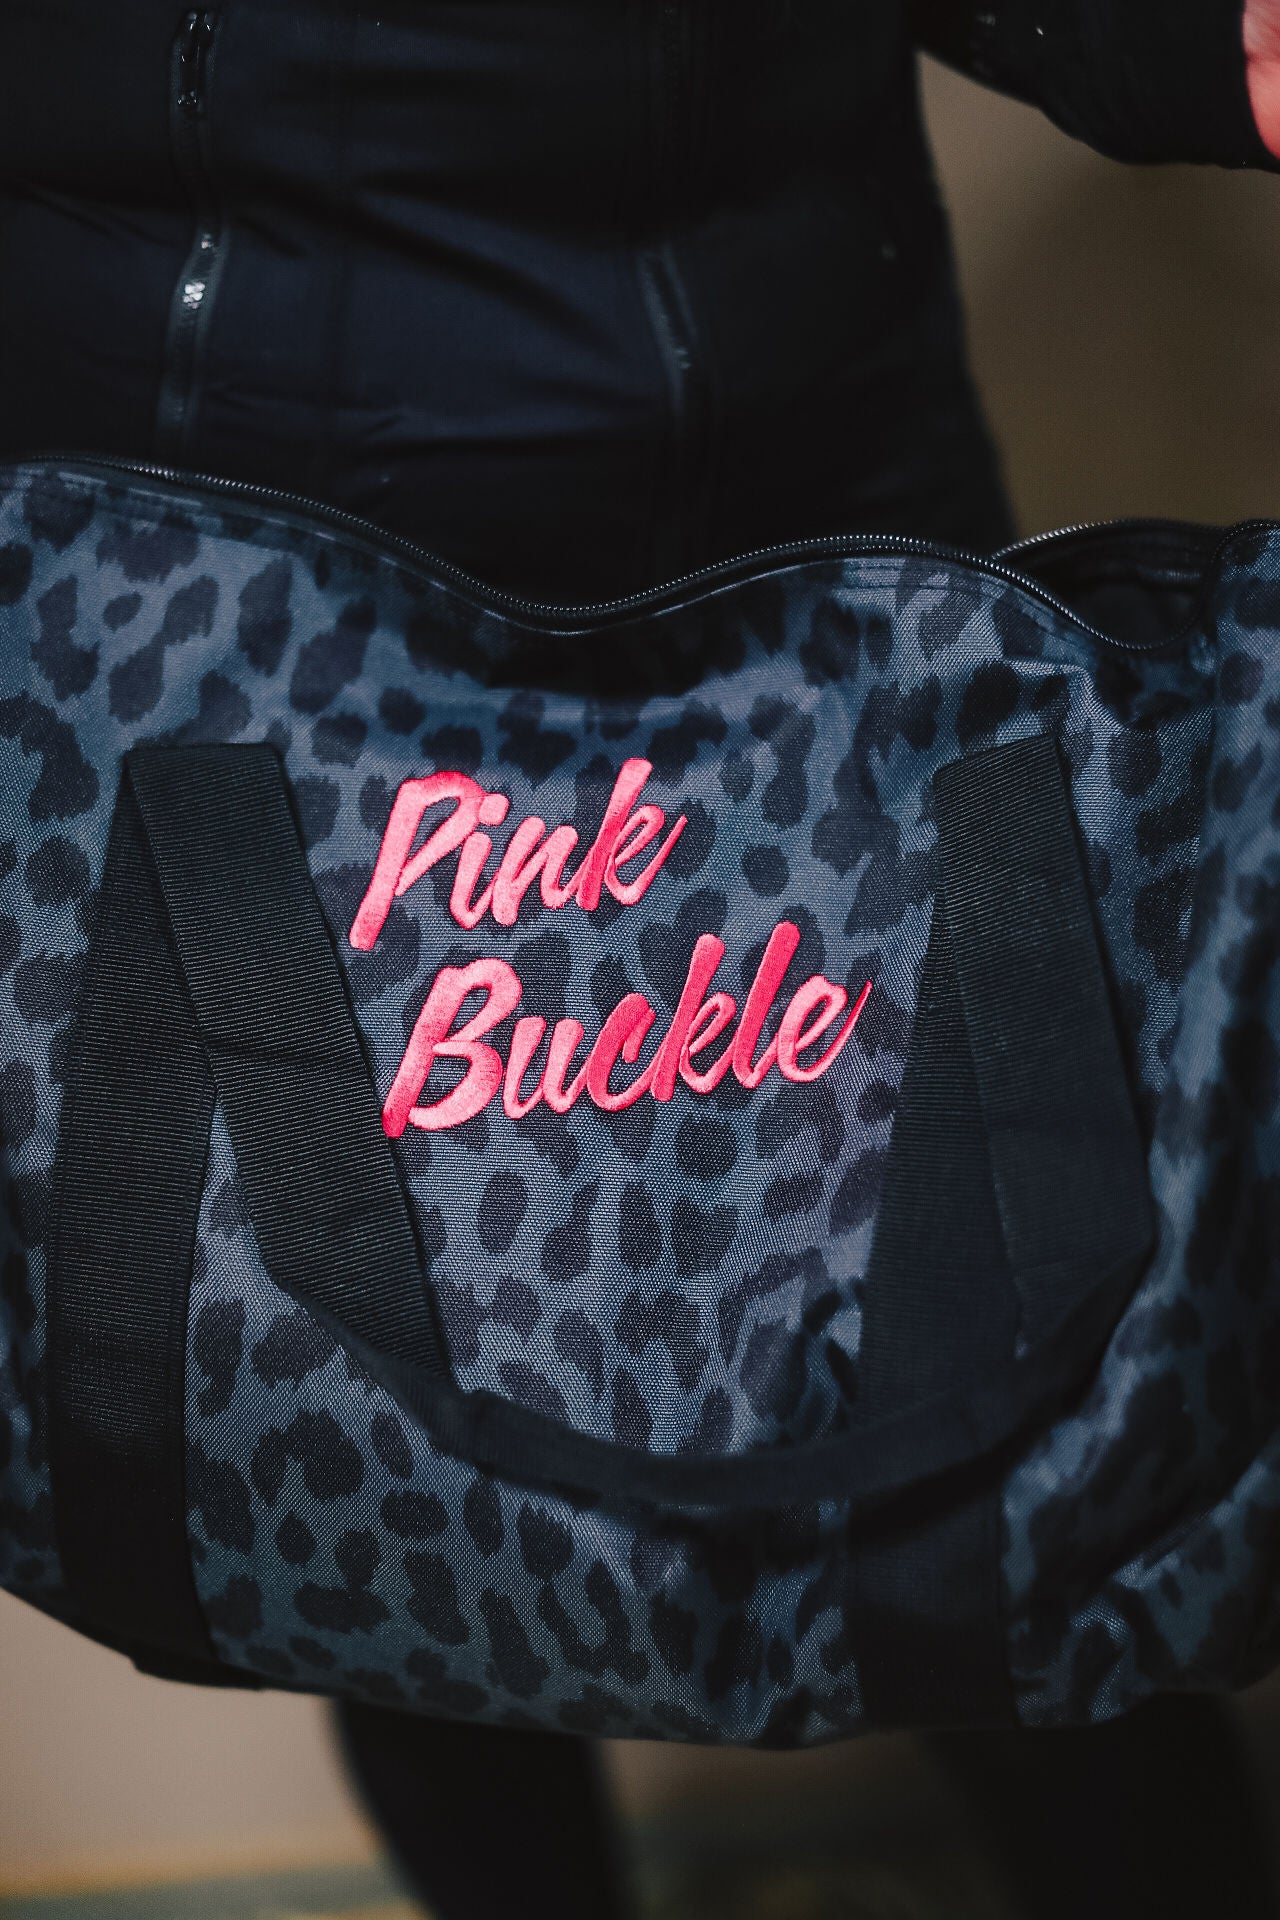 Pink Buckle Duffle Bag